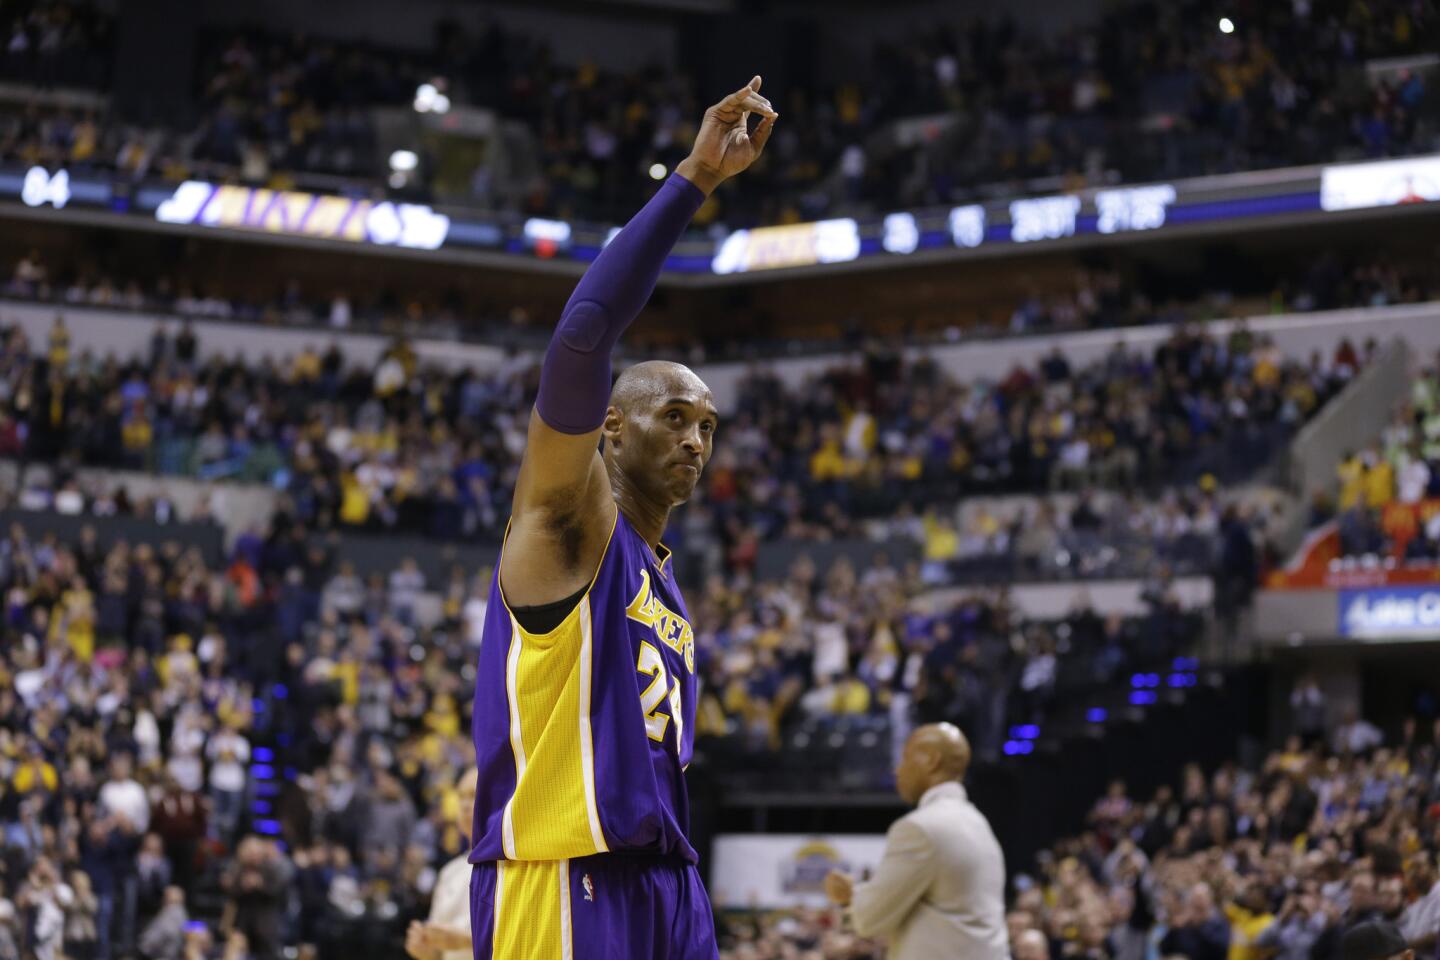 Kobe Bryant's latest farewell stop brings fond memories